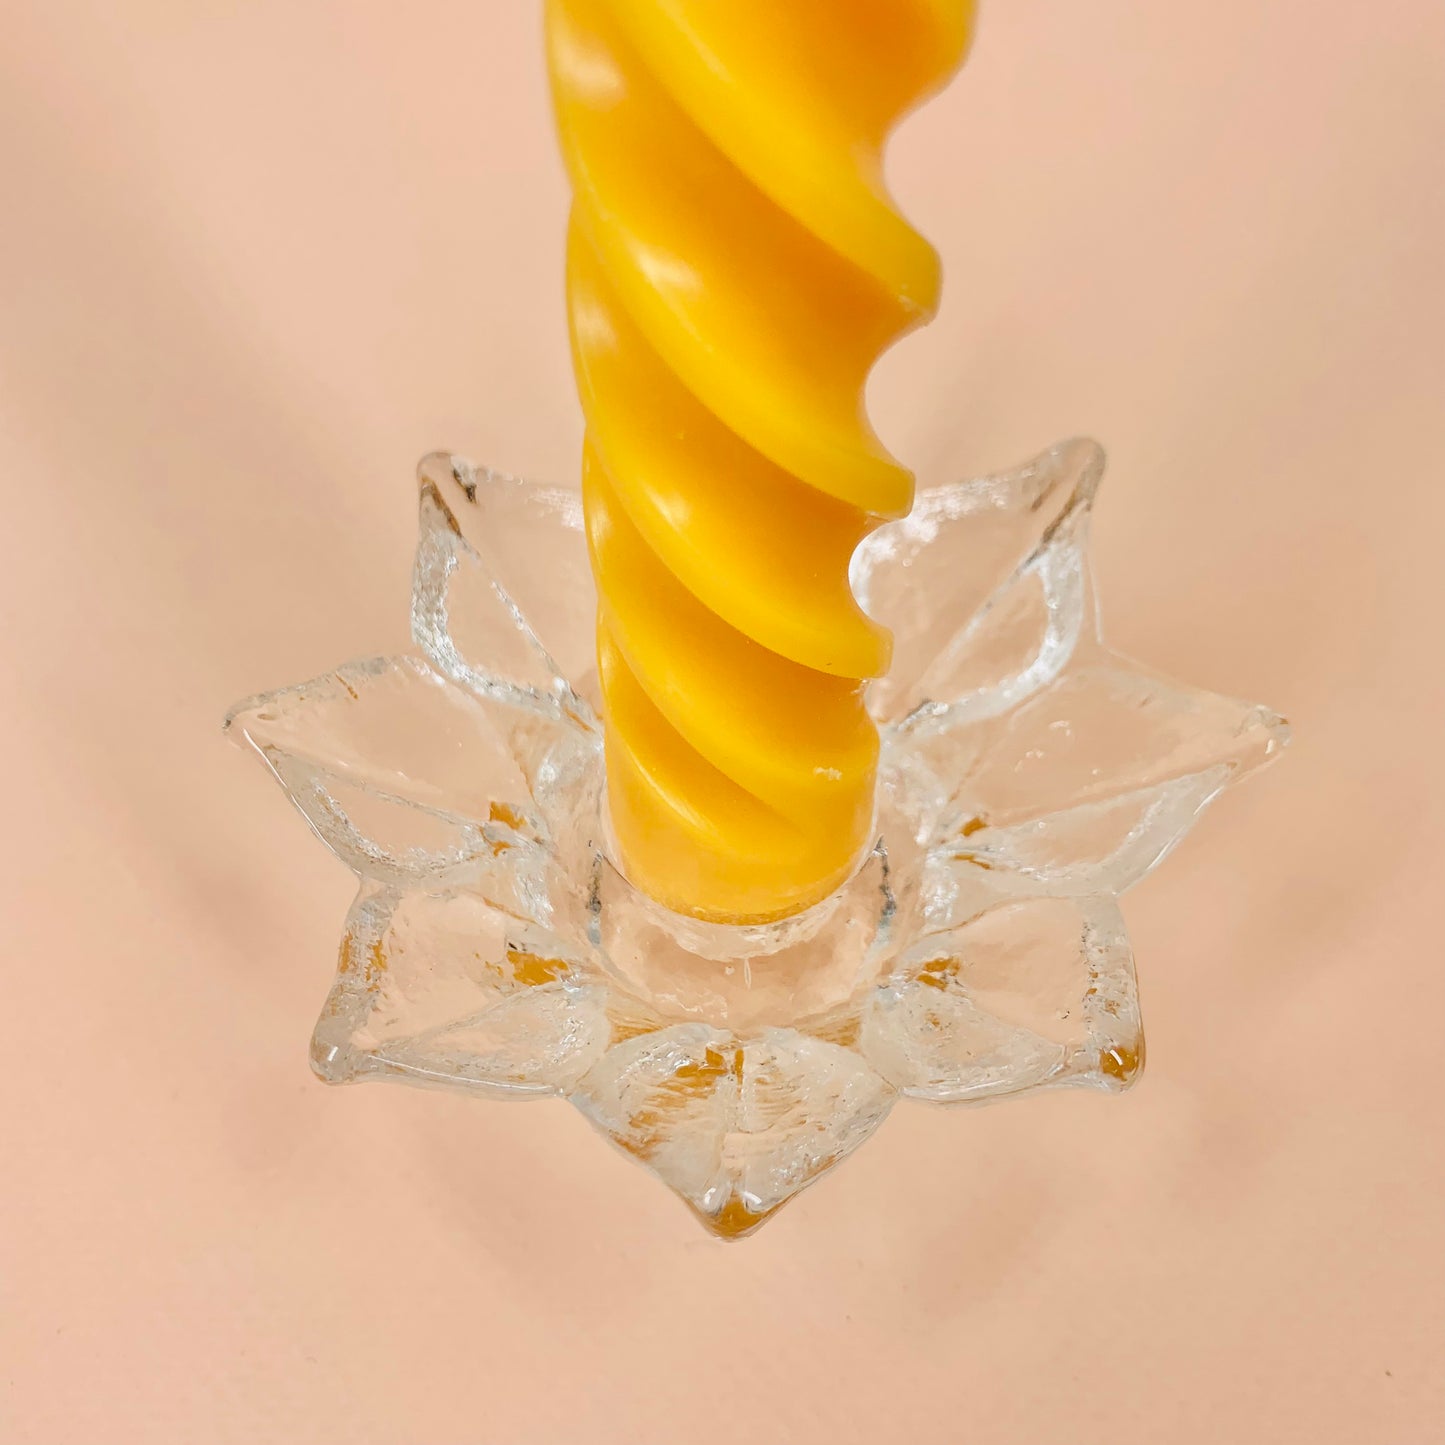 MCM Sea Glasbruk made in Sweden glass candle holder